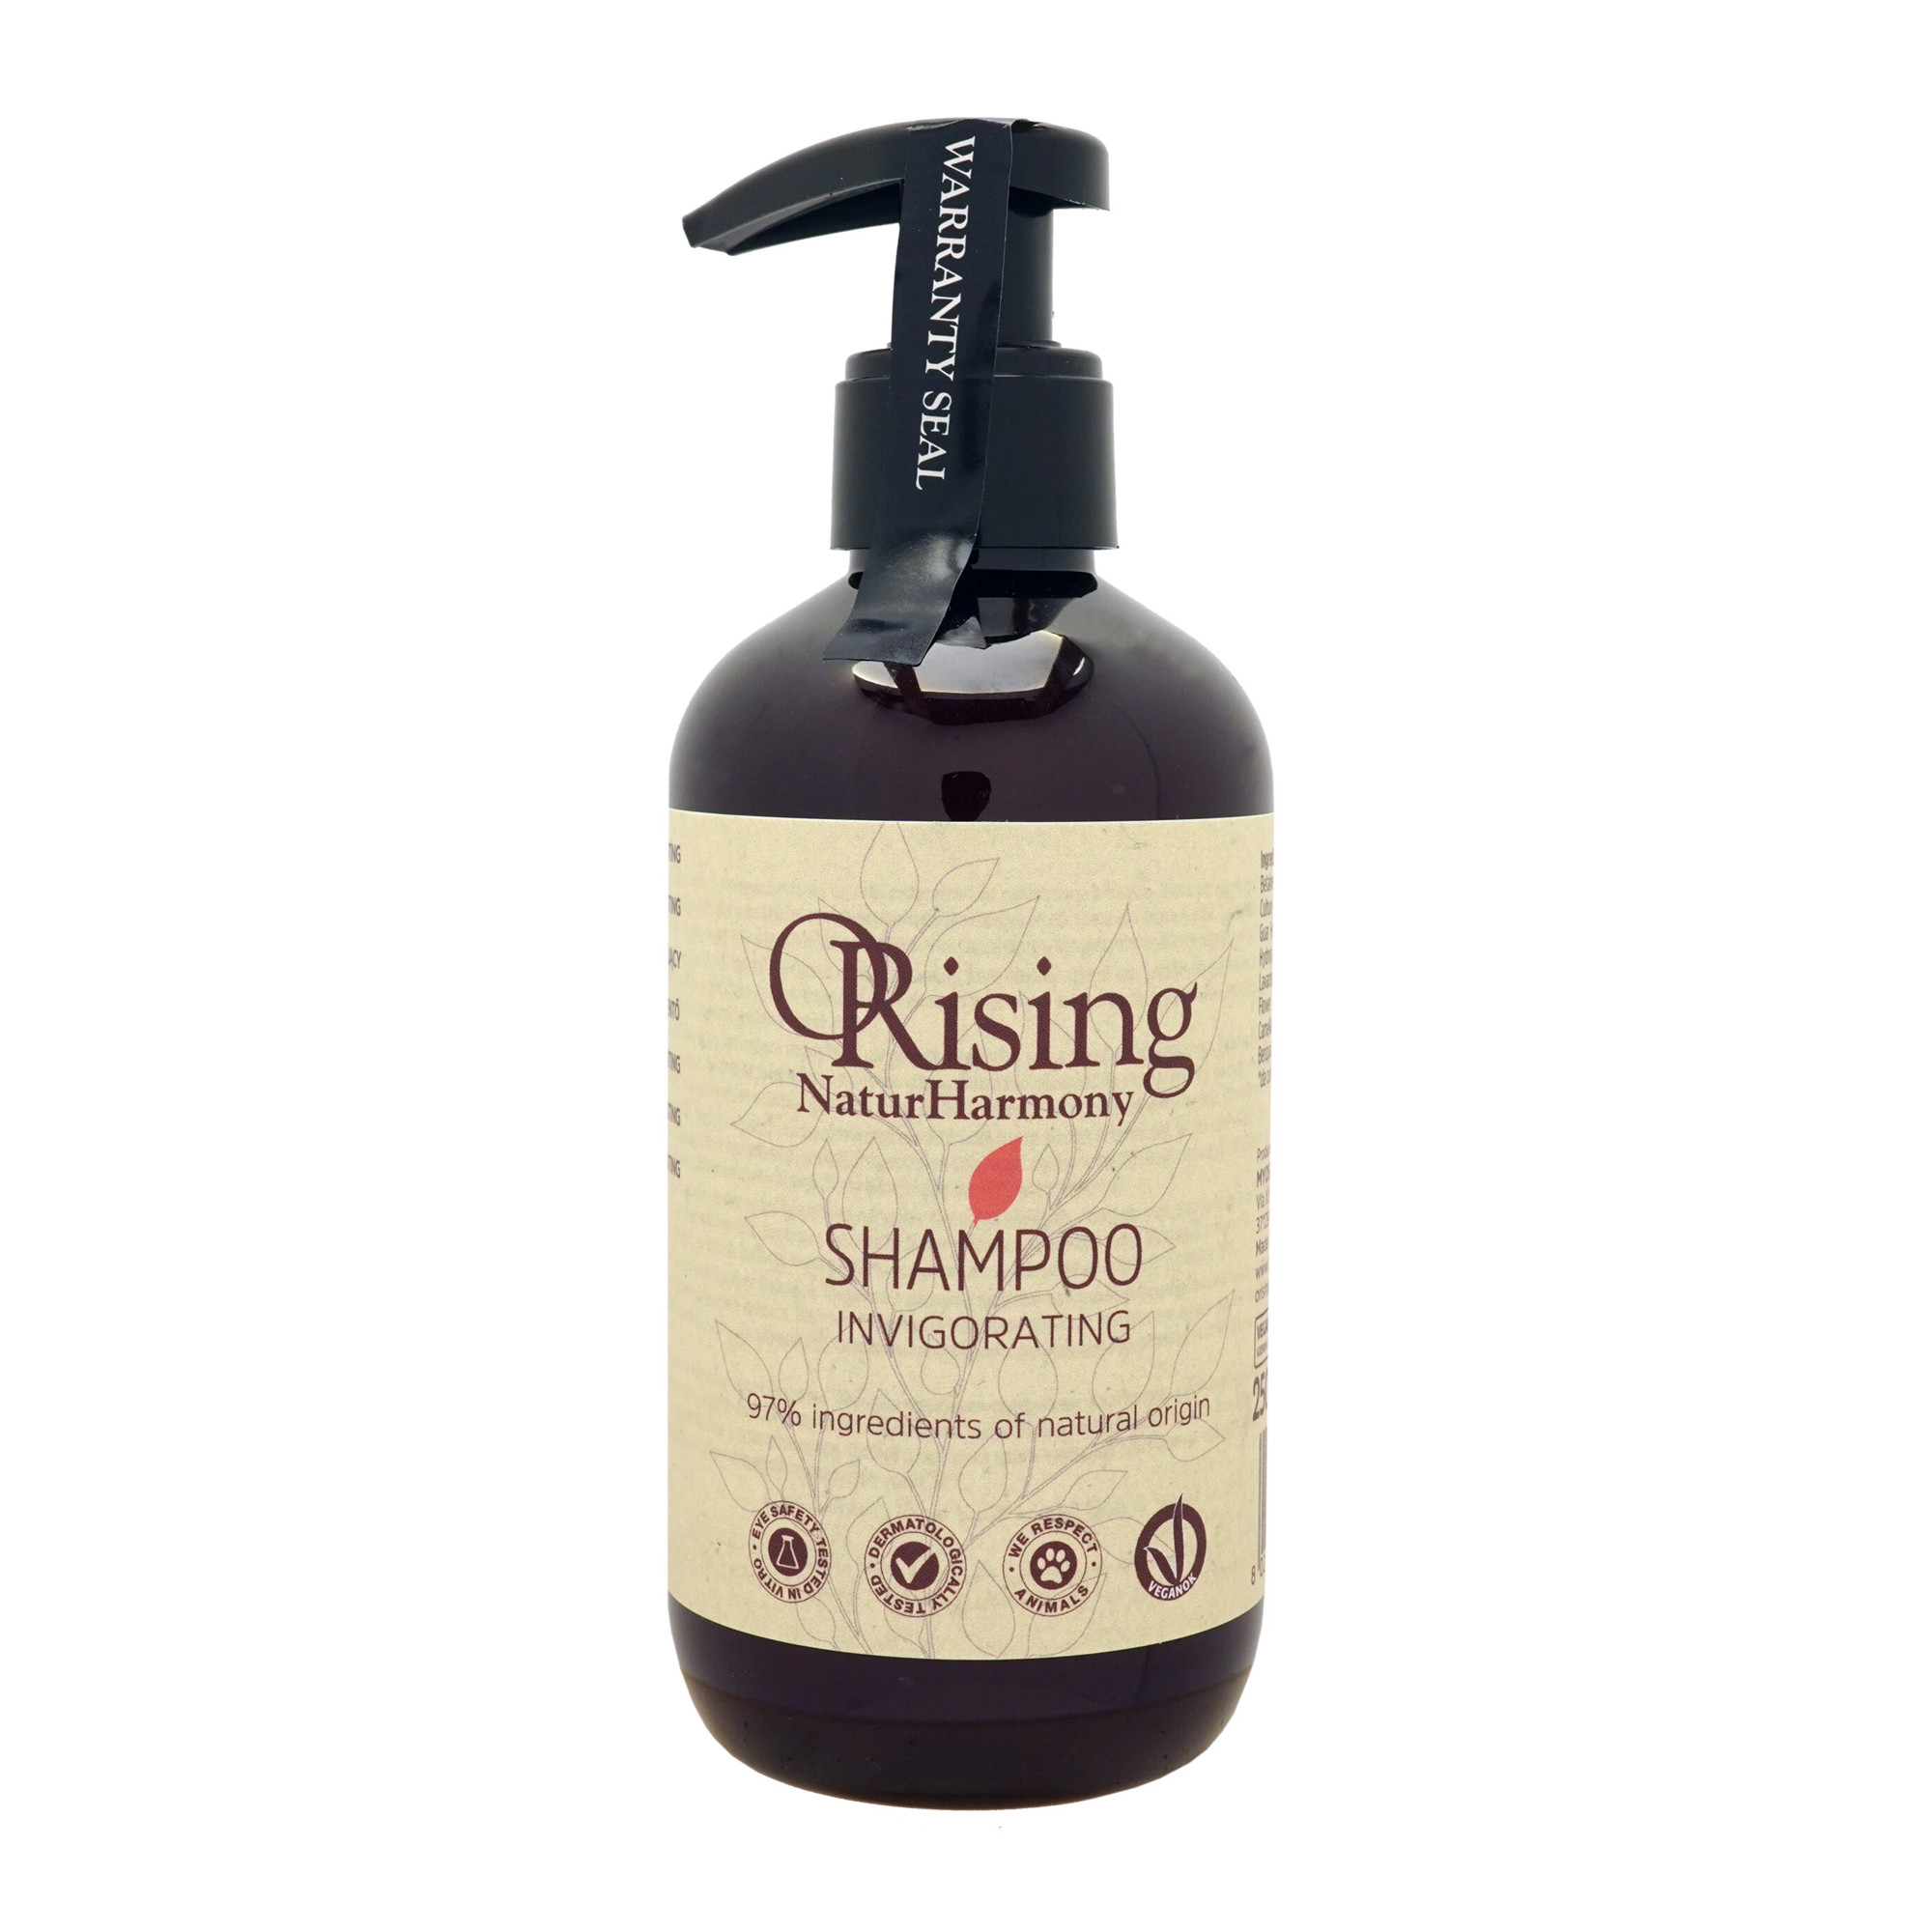 Orising Natur Harmony Invigorating Shampoo - Стимулирующий шампунь